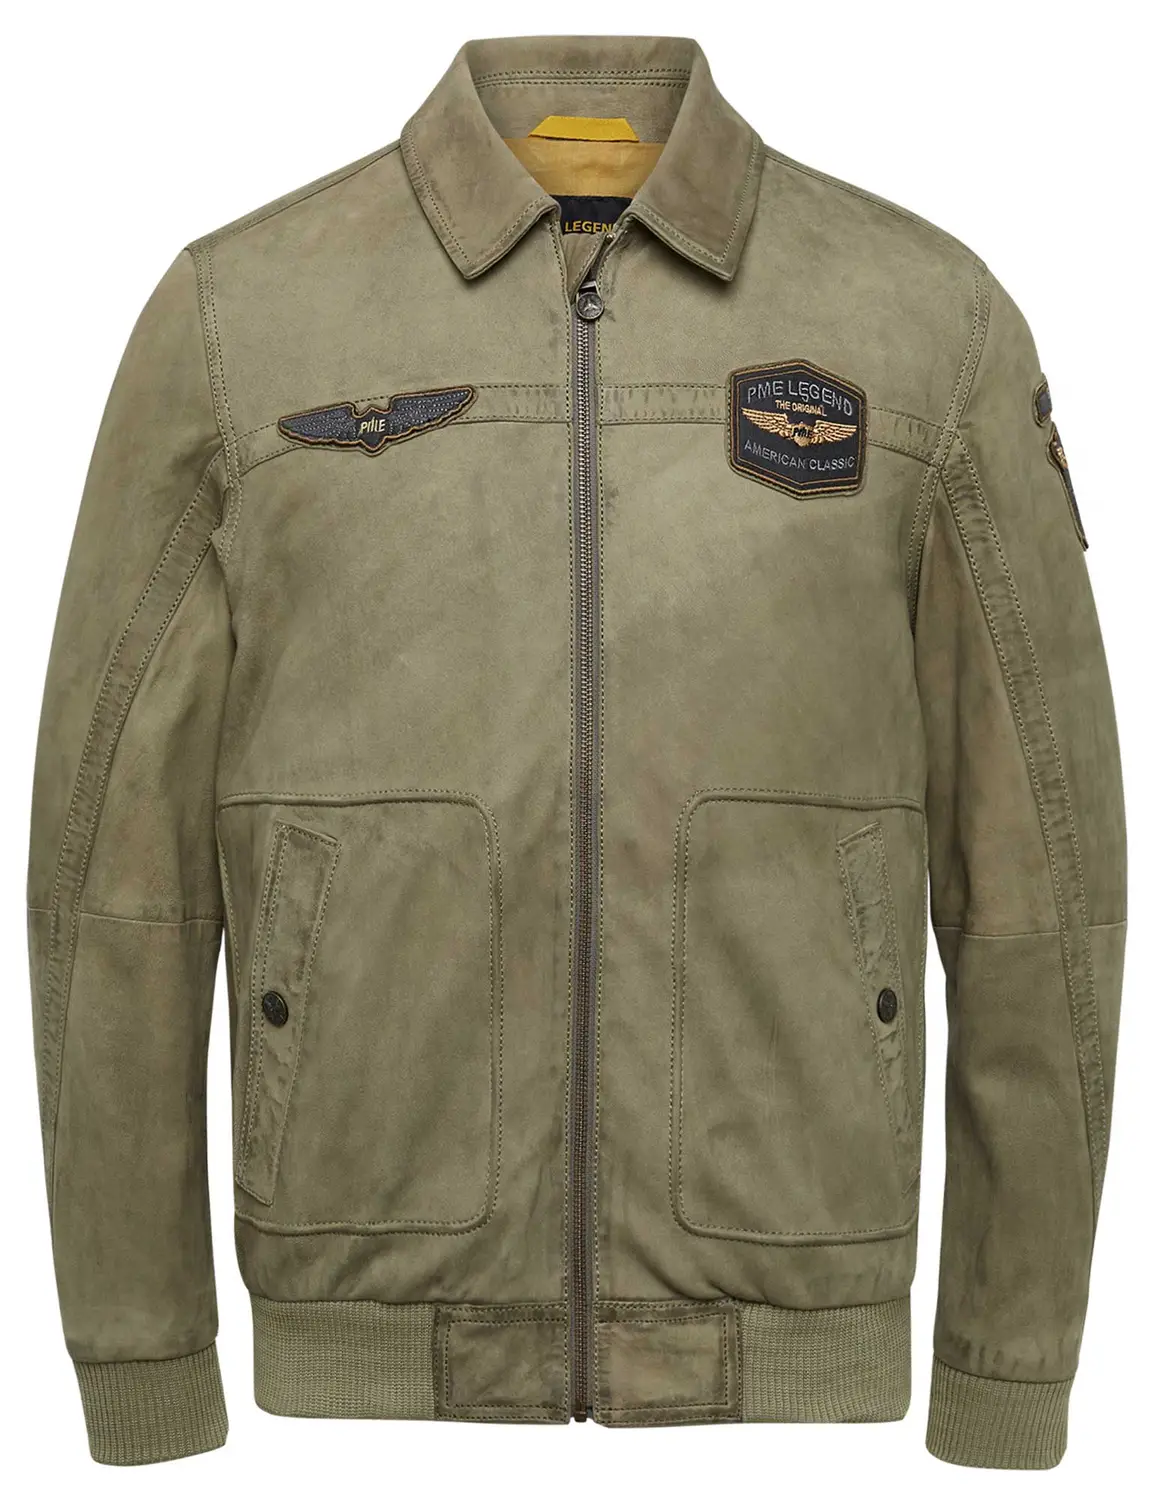 hoeveelheid verkoop Tegen de wil Steken PME Legend Bomber jacket SUMMER HUDSON 2.0 sh PLJ2302700 licht groen kopen  bij The Stone